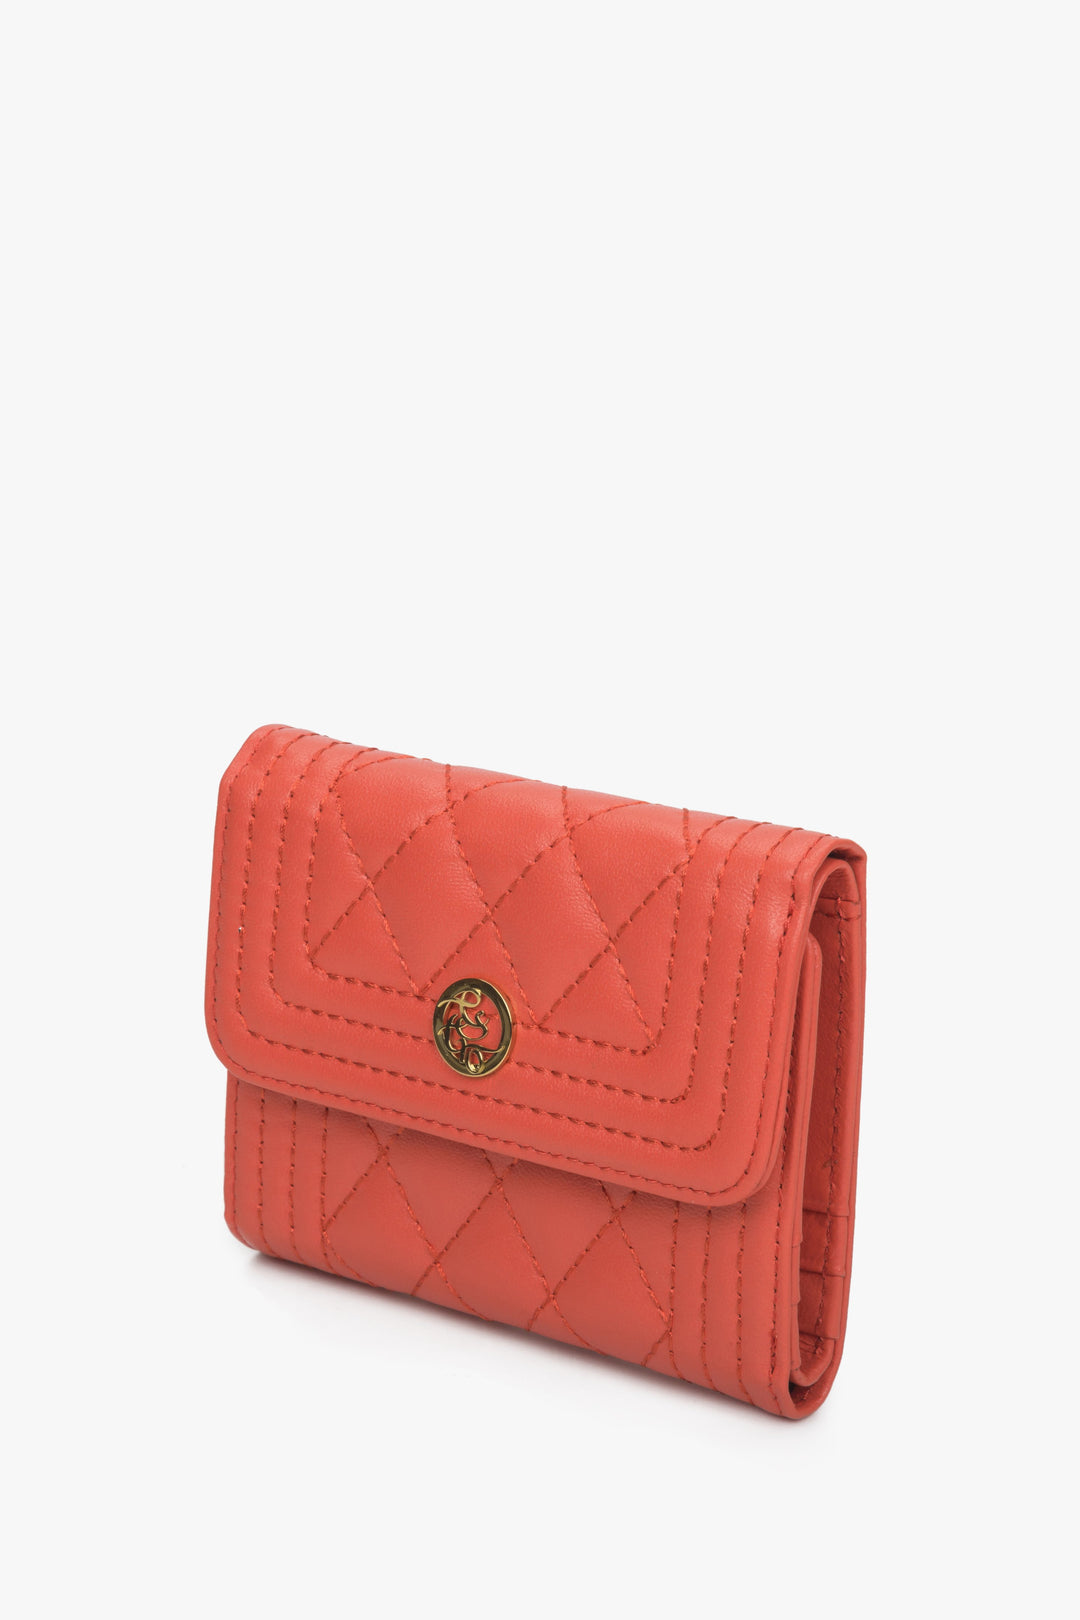 Red Estro women's wallet.